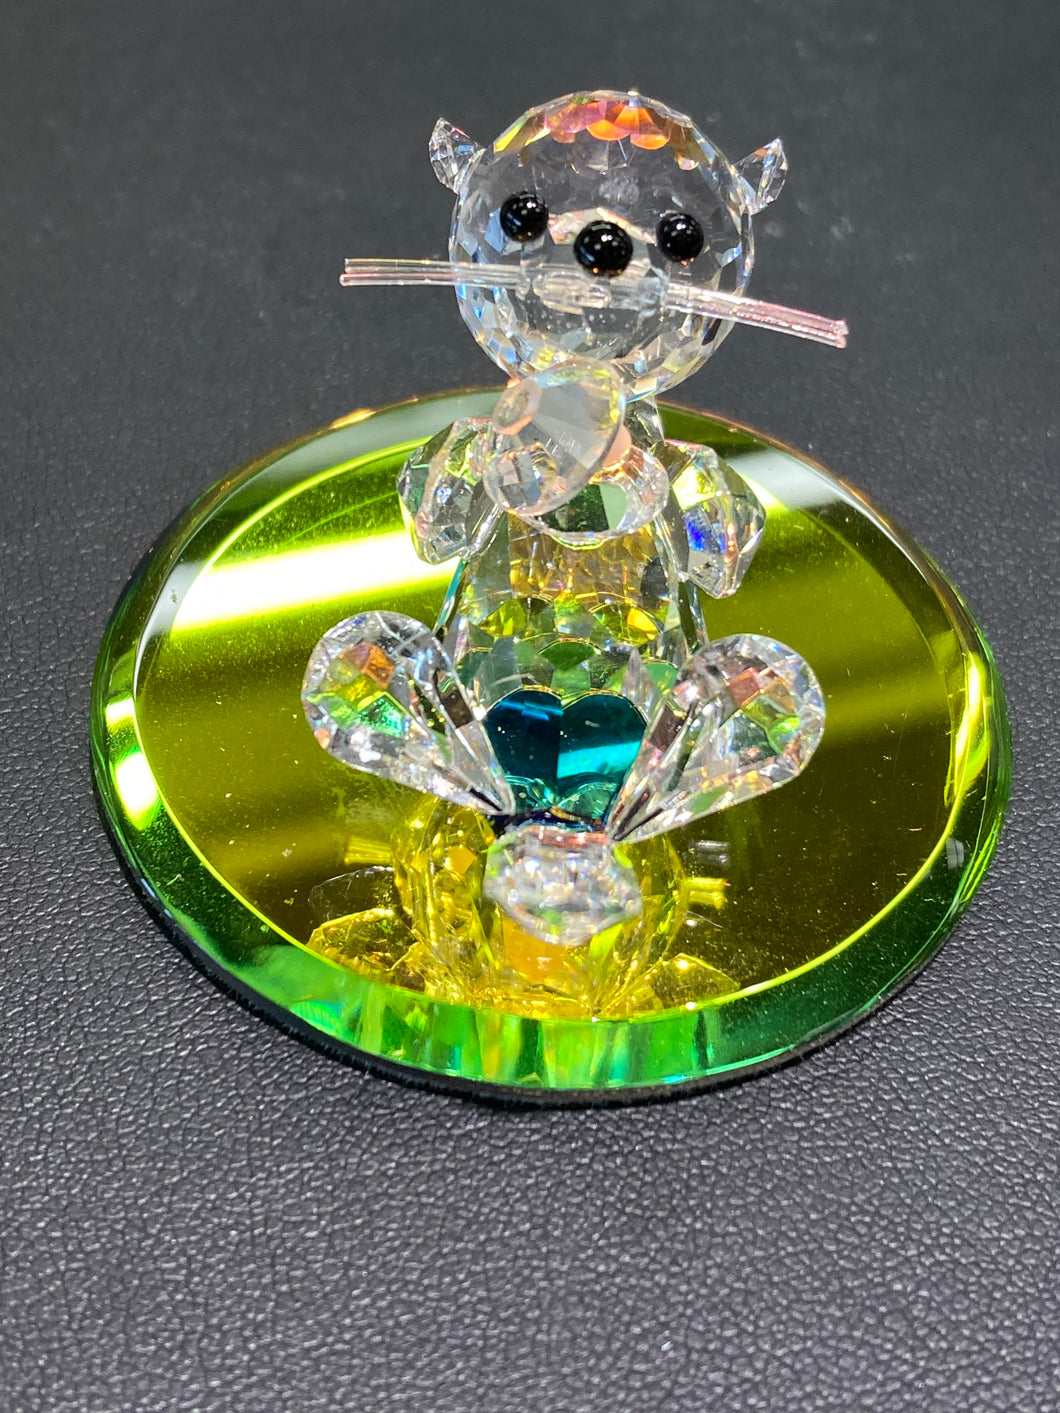 Chillin Otter Crystal Figurine